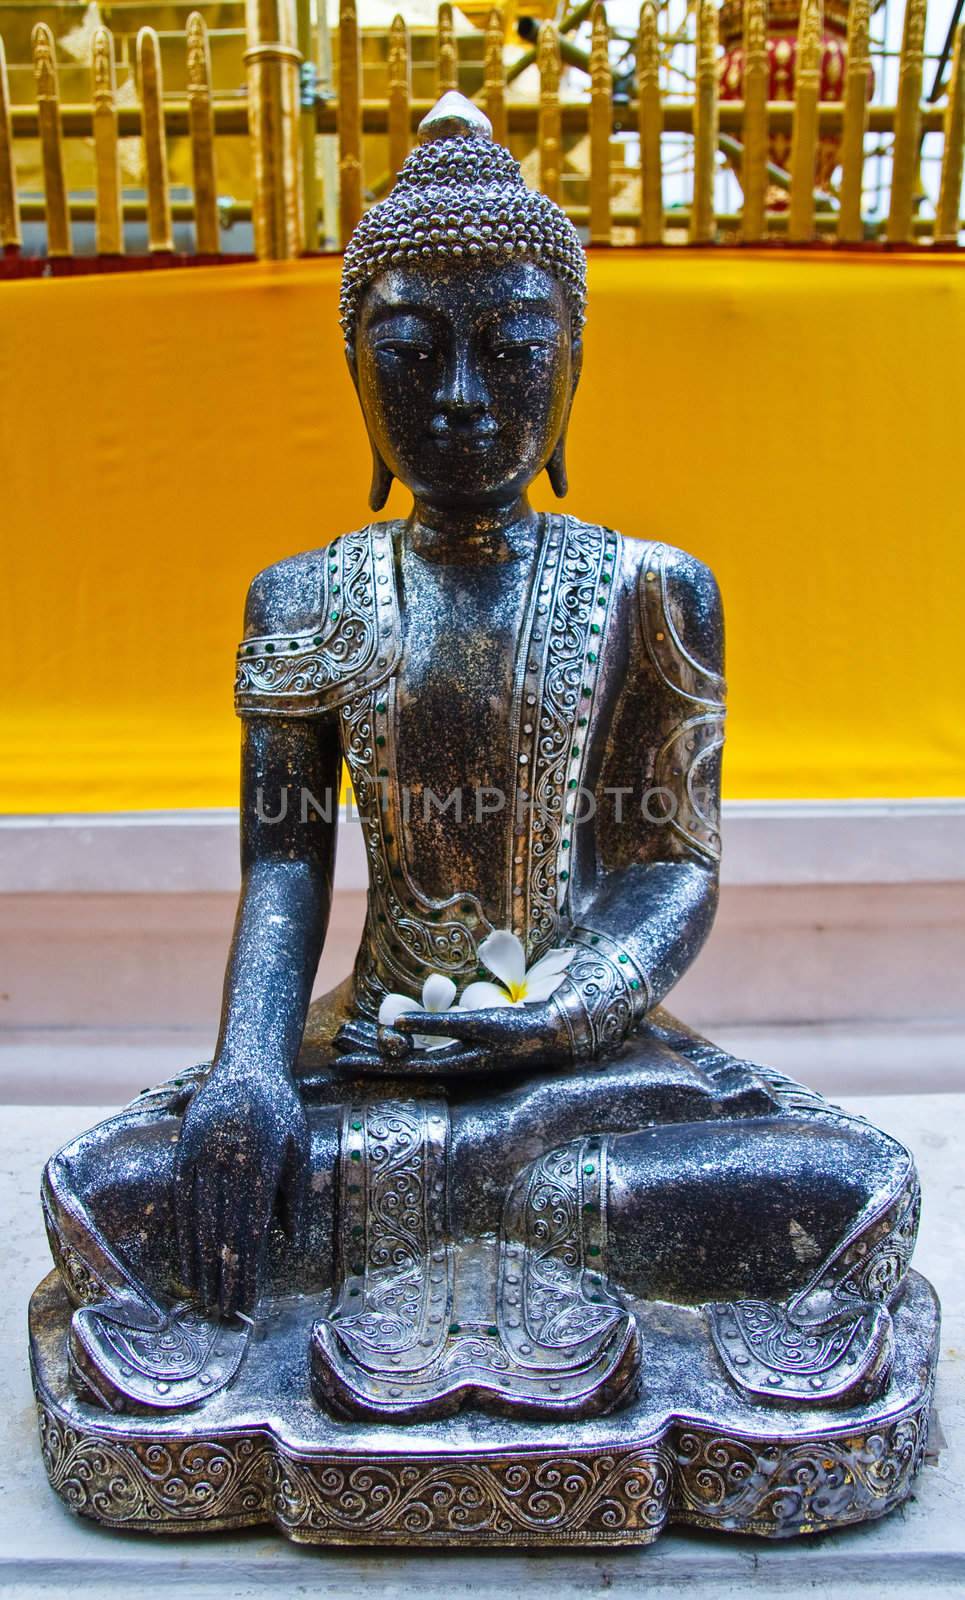 Shiny black Buddha image by criminalatt